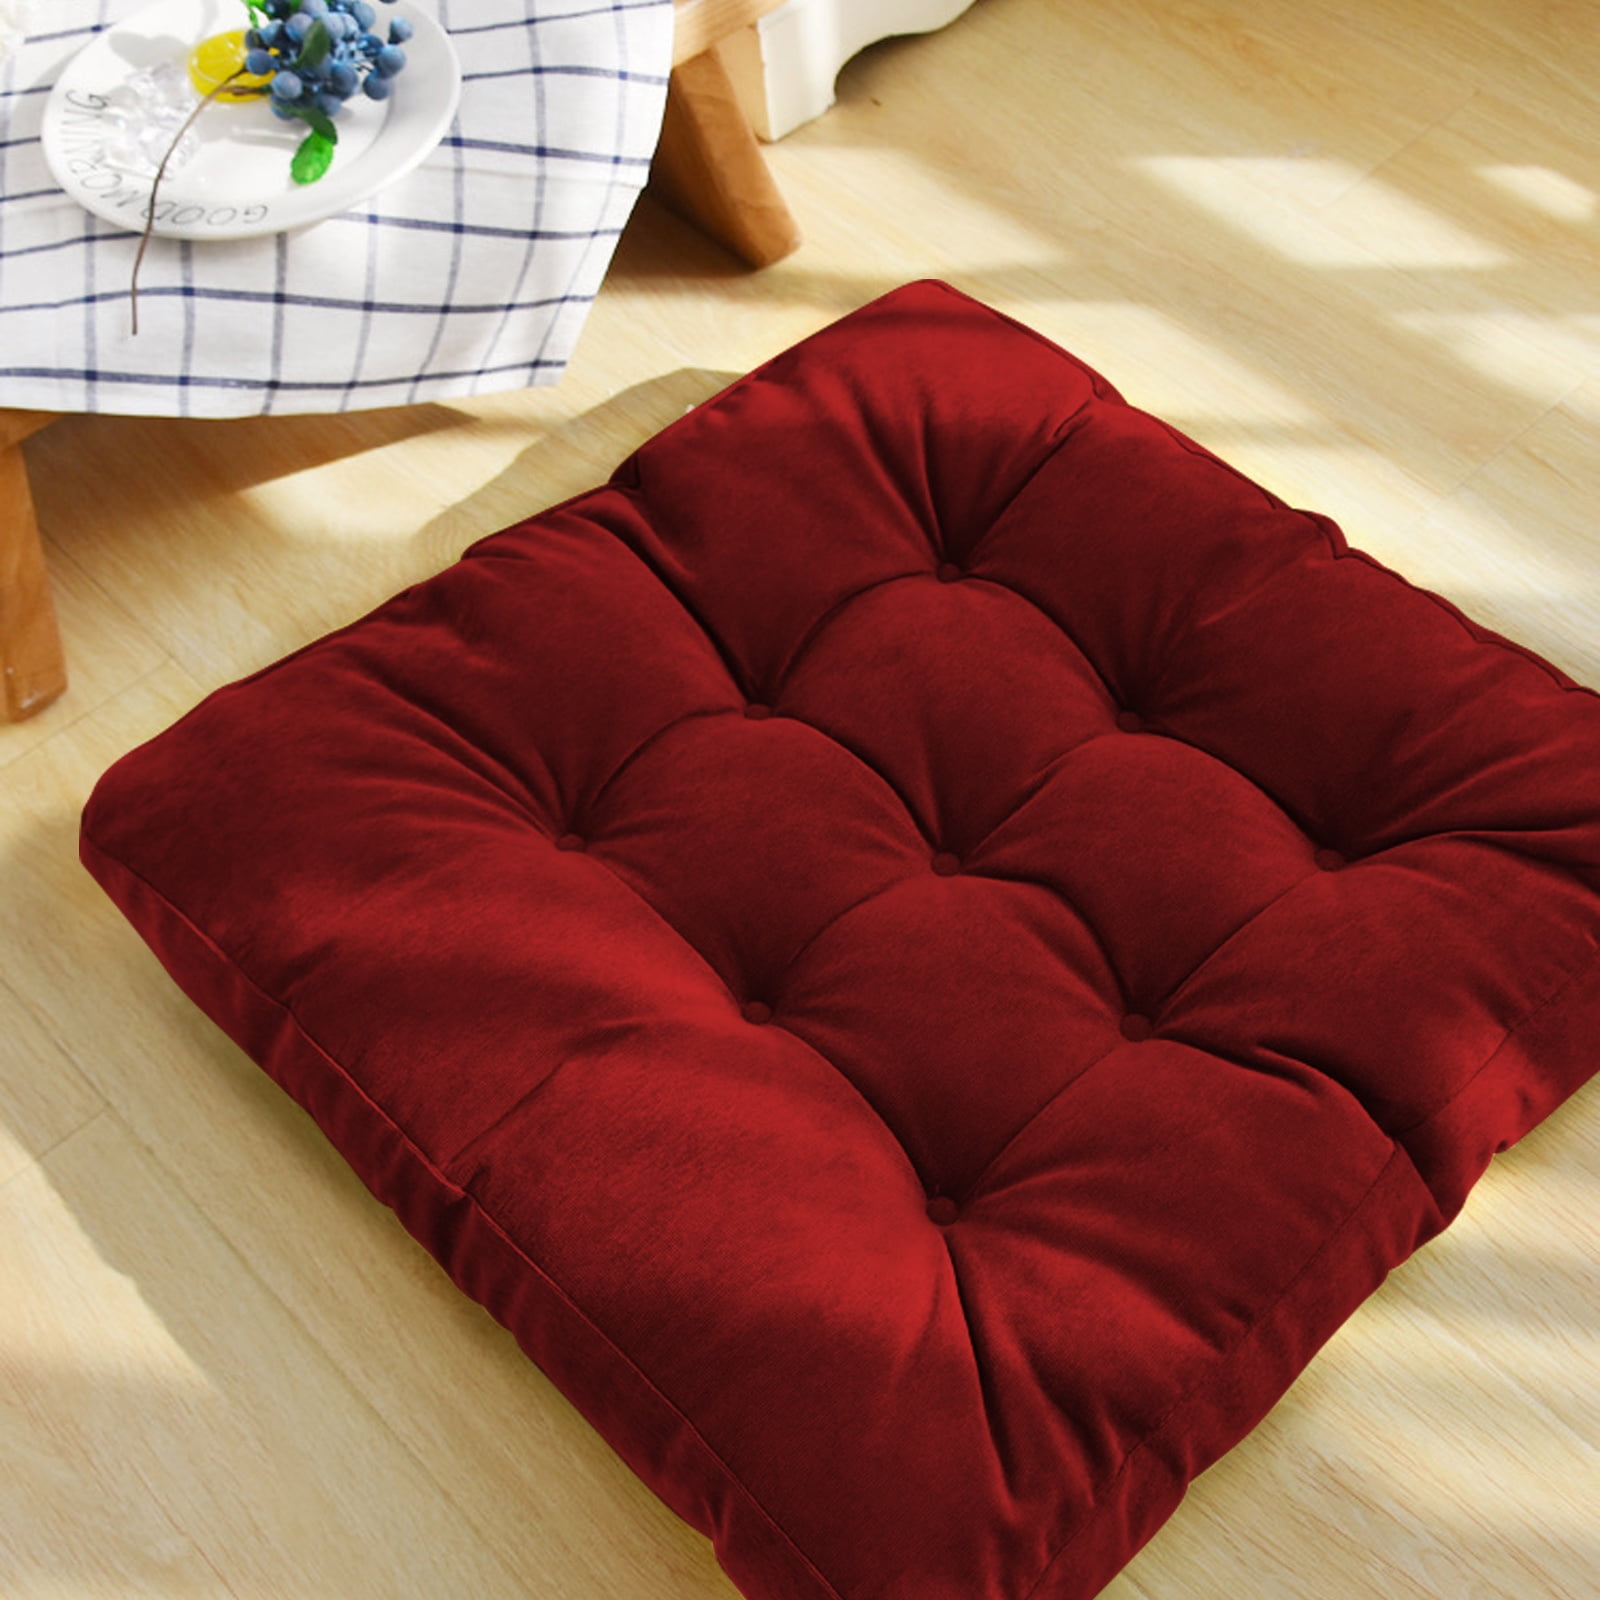 Sexysamba Square Floor Seat Pillows Cushions 22 x 22, Soft Thicken Yoga  Meditation Cushion Pouf Tufted Corduroy Tatami Floor Pillow Reading Cushion